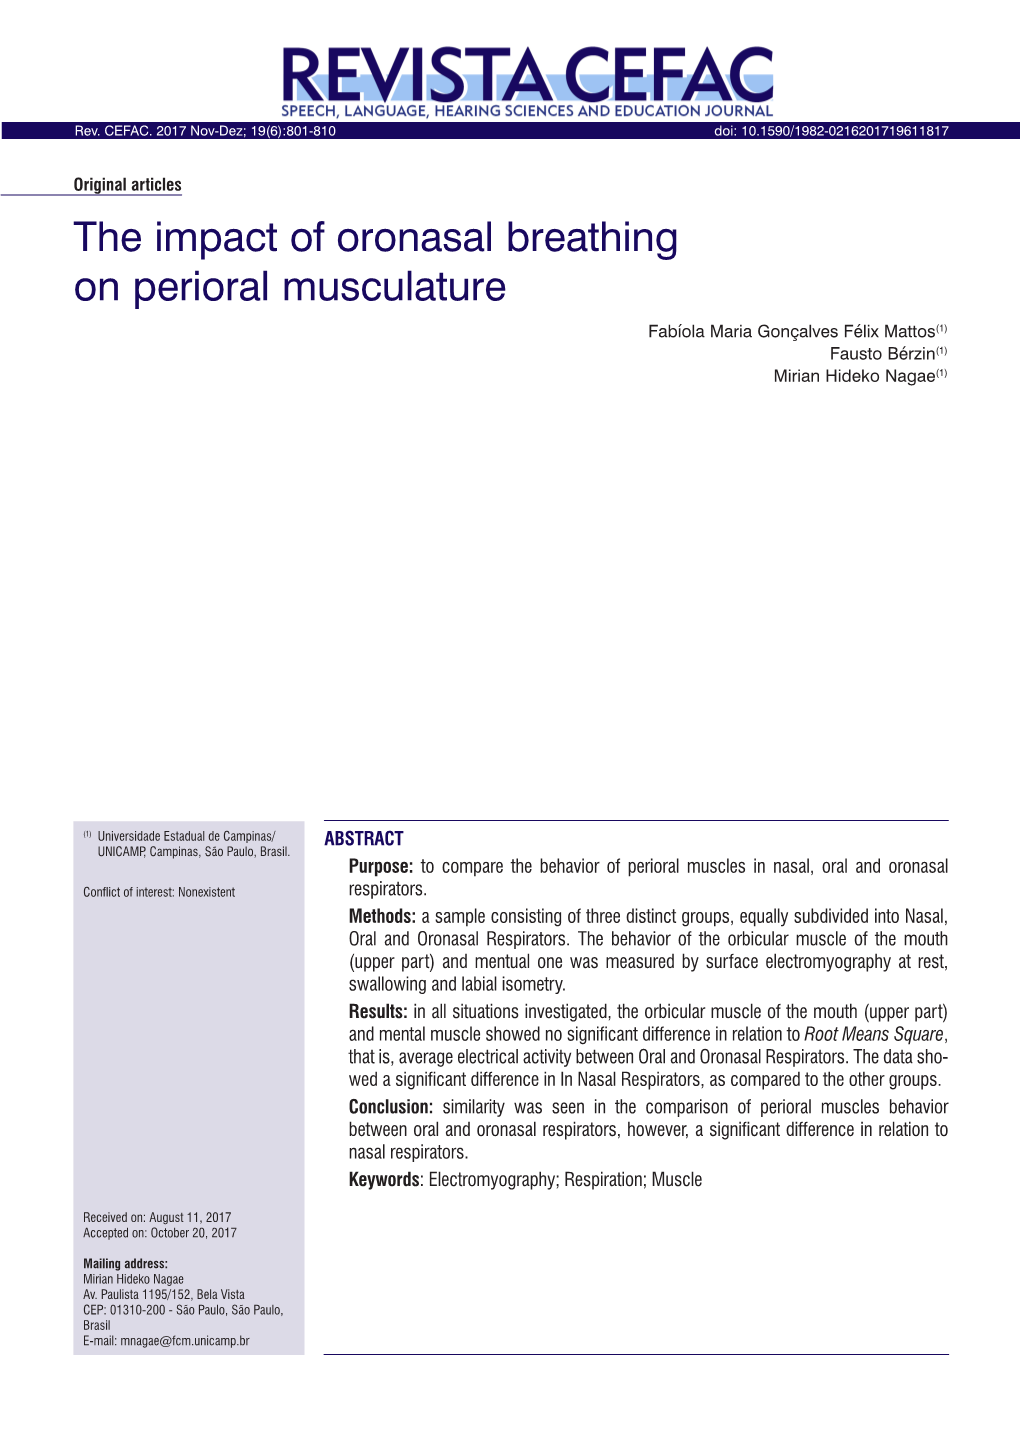 The Impact of Oronasal Breathing on Perioral Musculature Fabíola Maria Gonçalves Félix Mattos(1) Fausto Bérzin(1) Mirian Hideko Nagae(1)